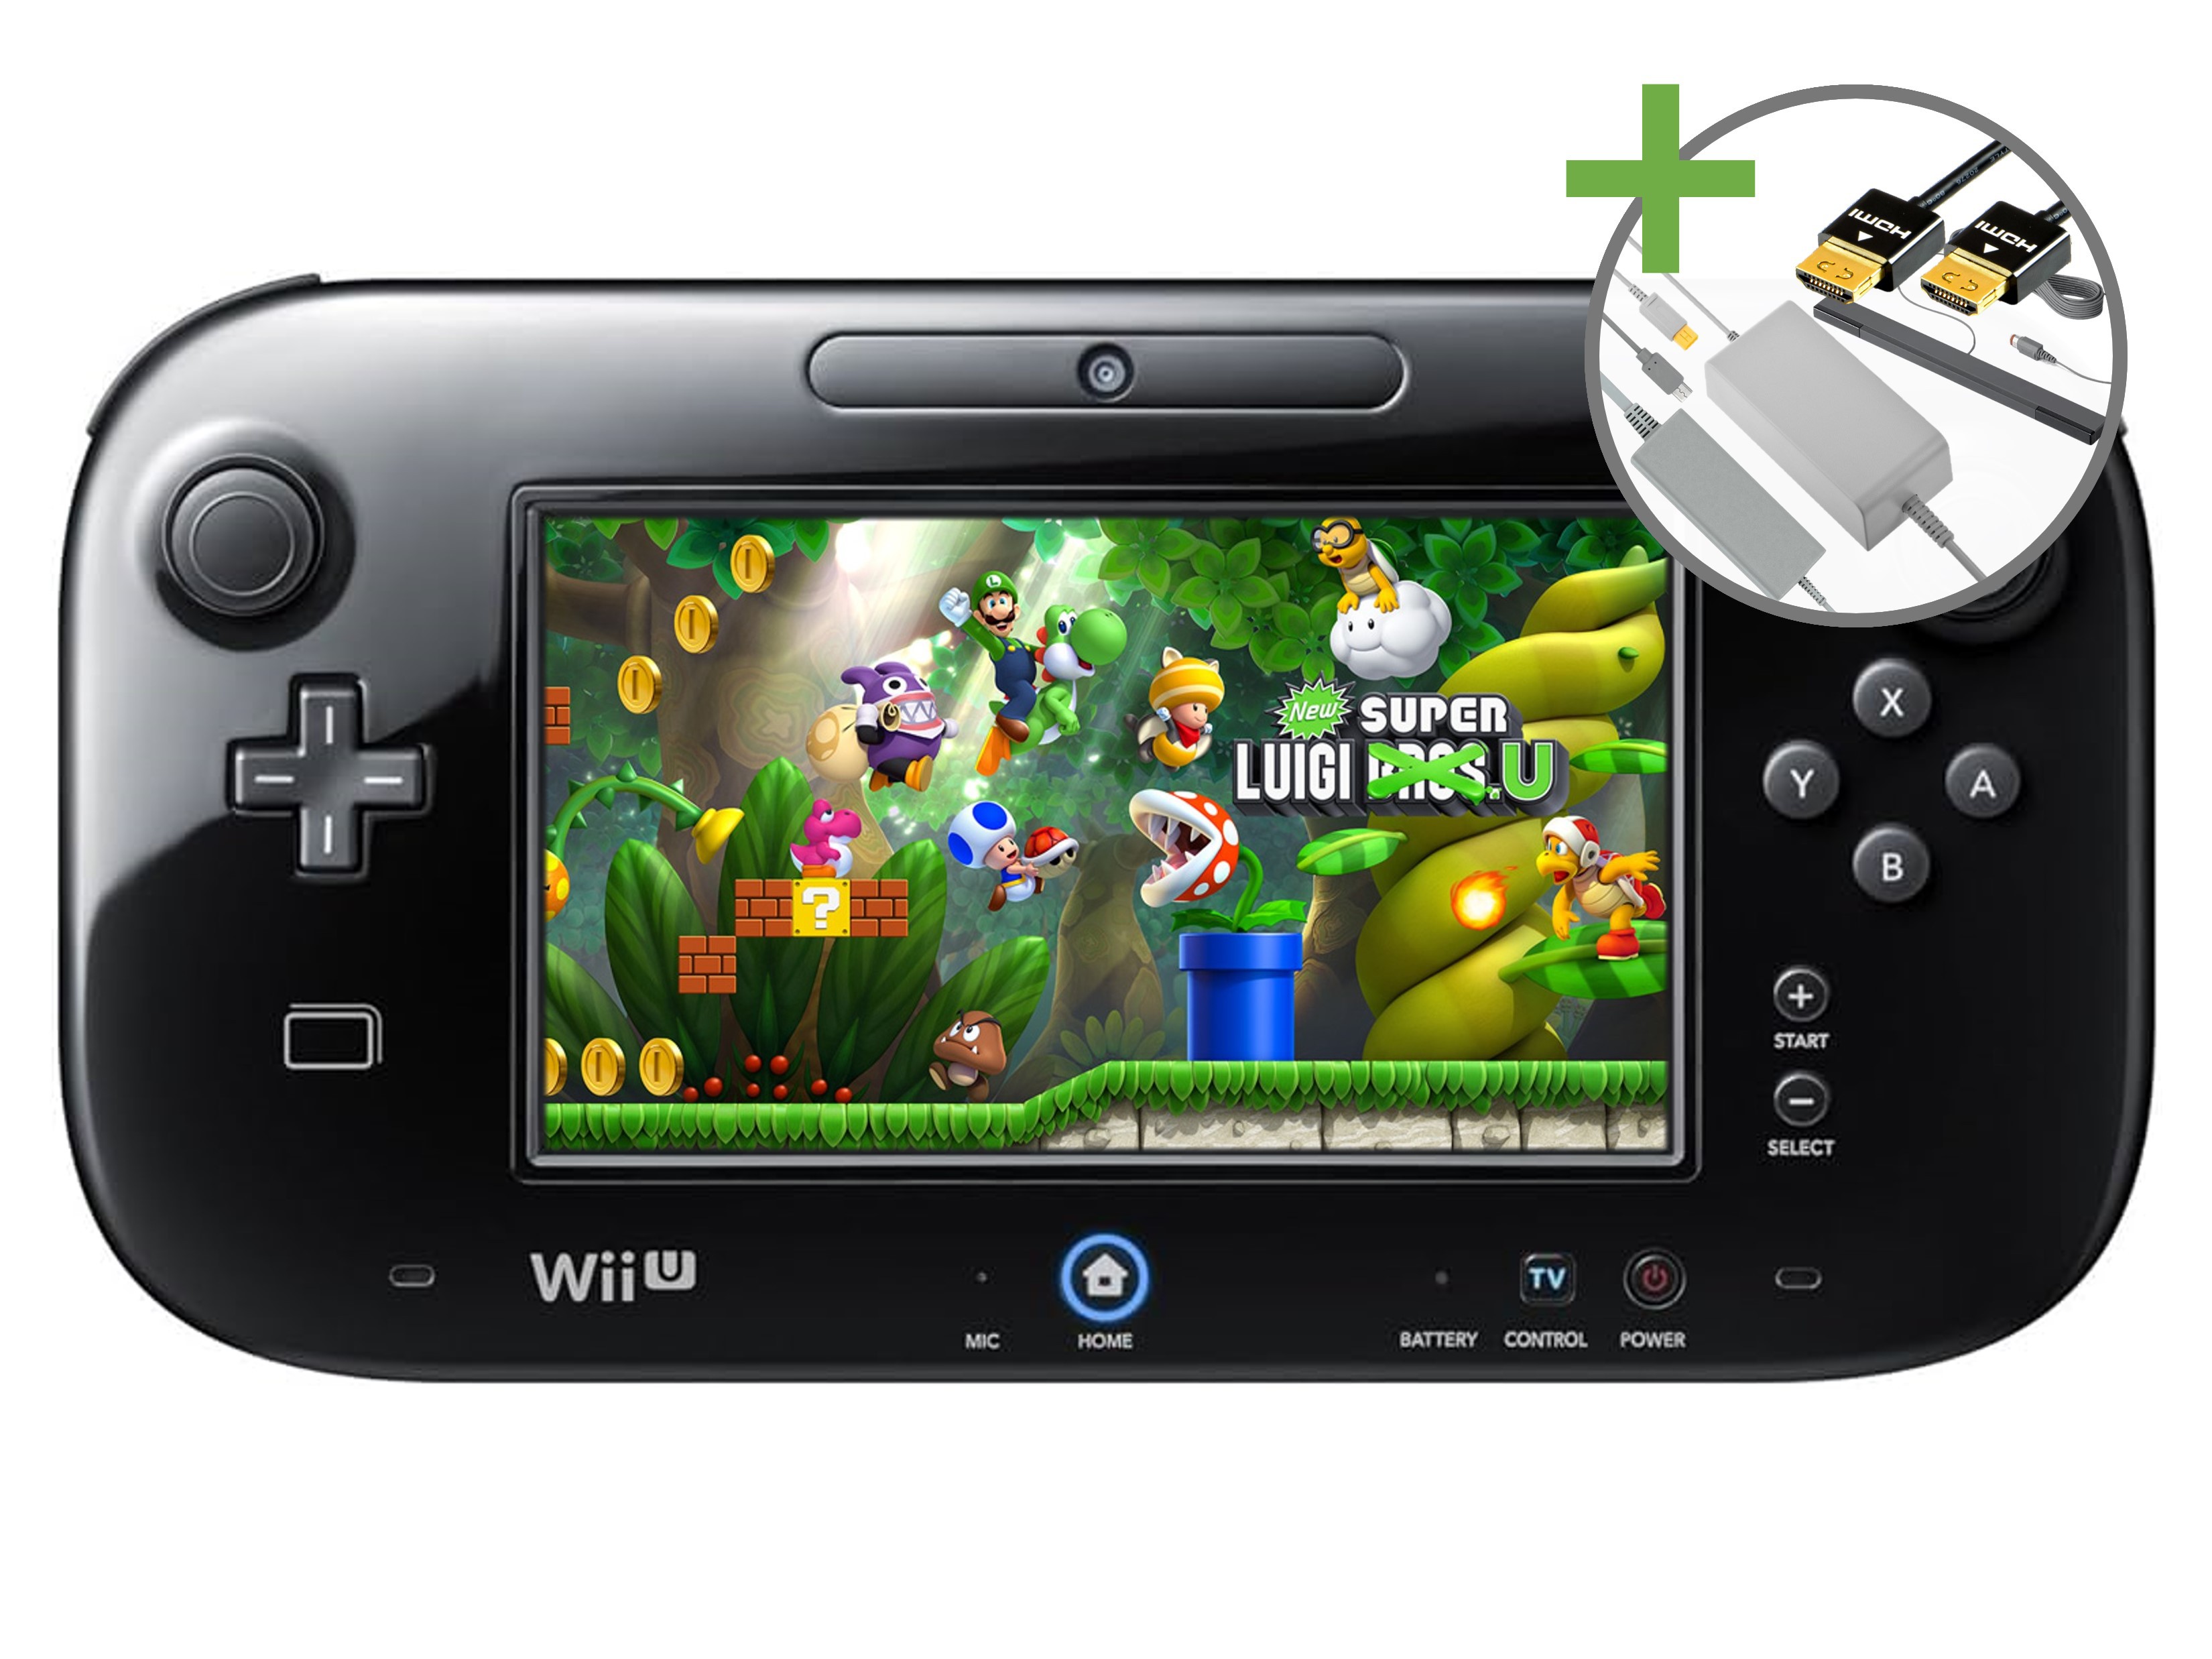 Nintendo Wii U Starter Pack - New Super Mario Bros. U + New Super Luigi U Edition [Complete] - Wii U Hardware - 3